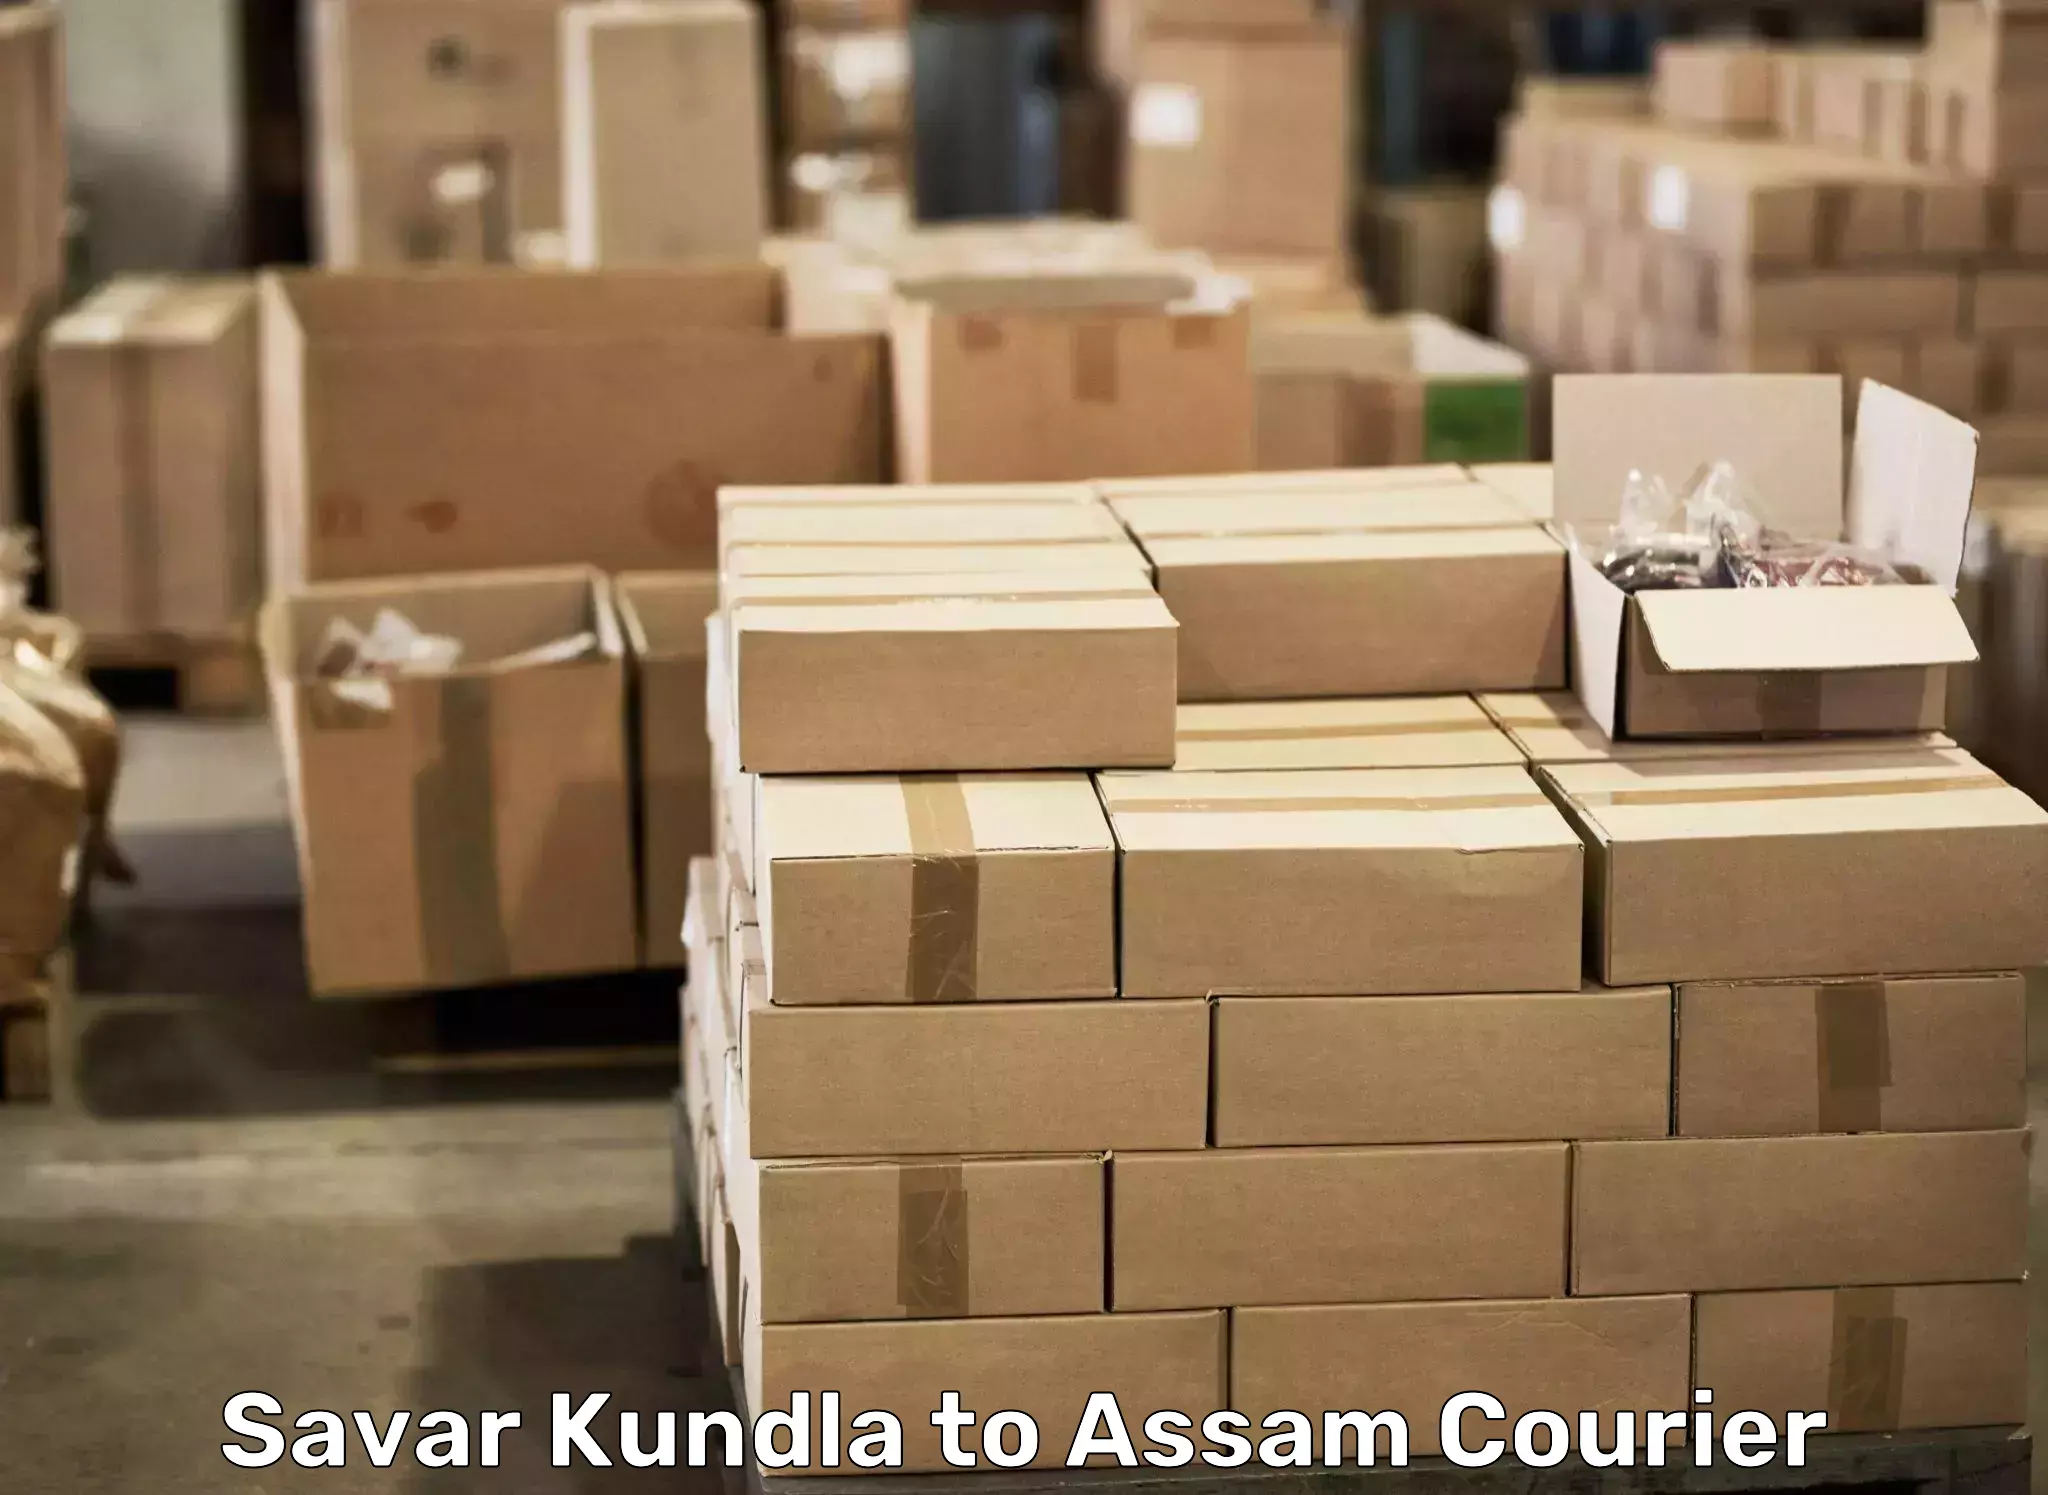 Professional moving company Savar Kundla to Kalain